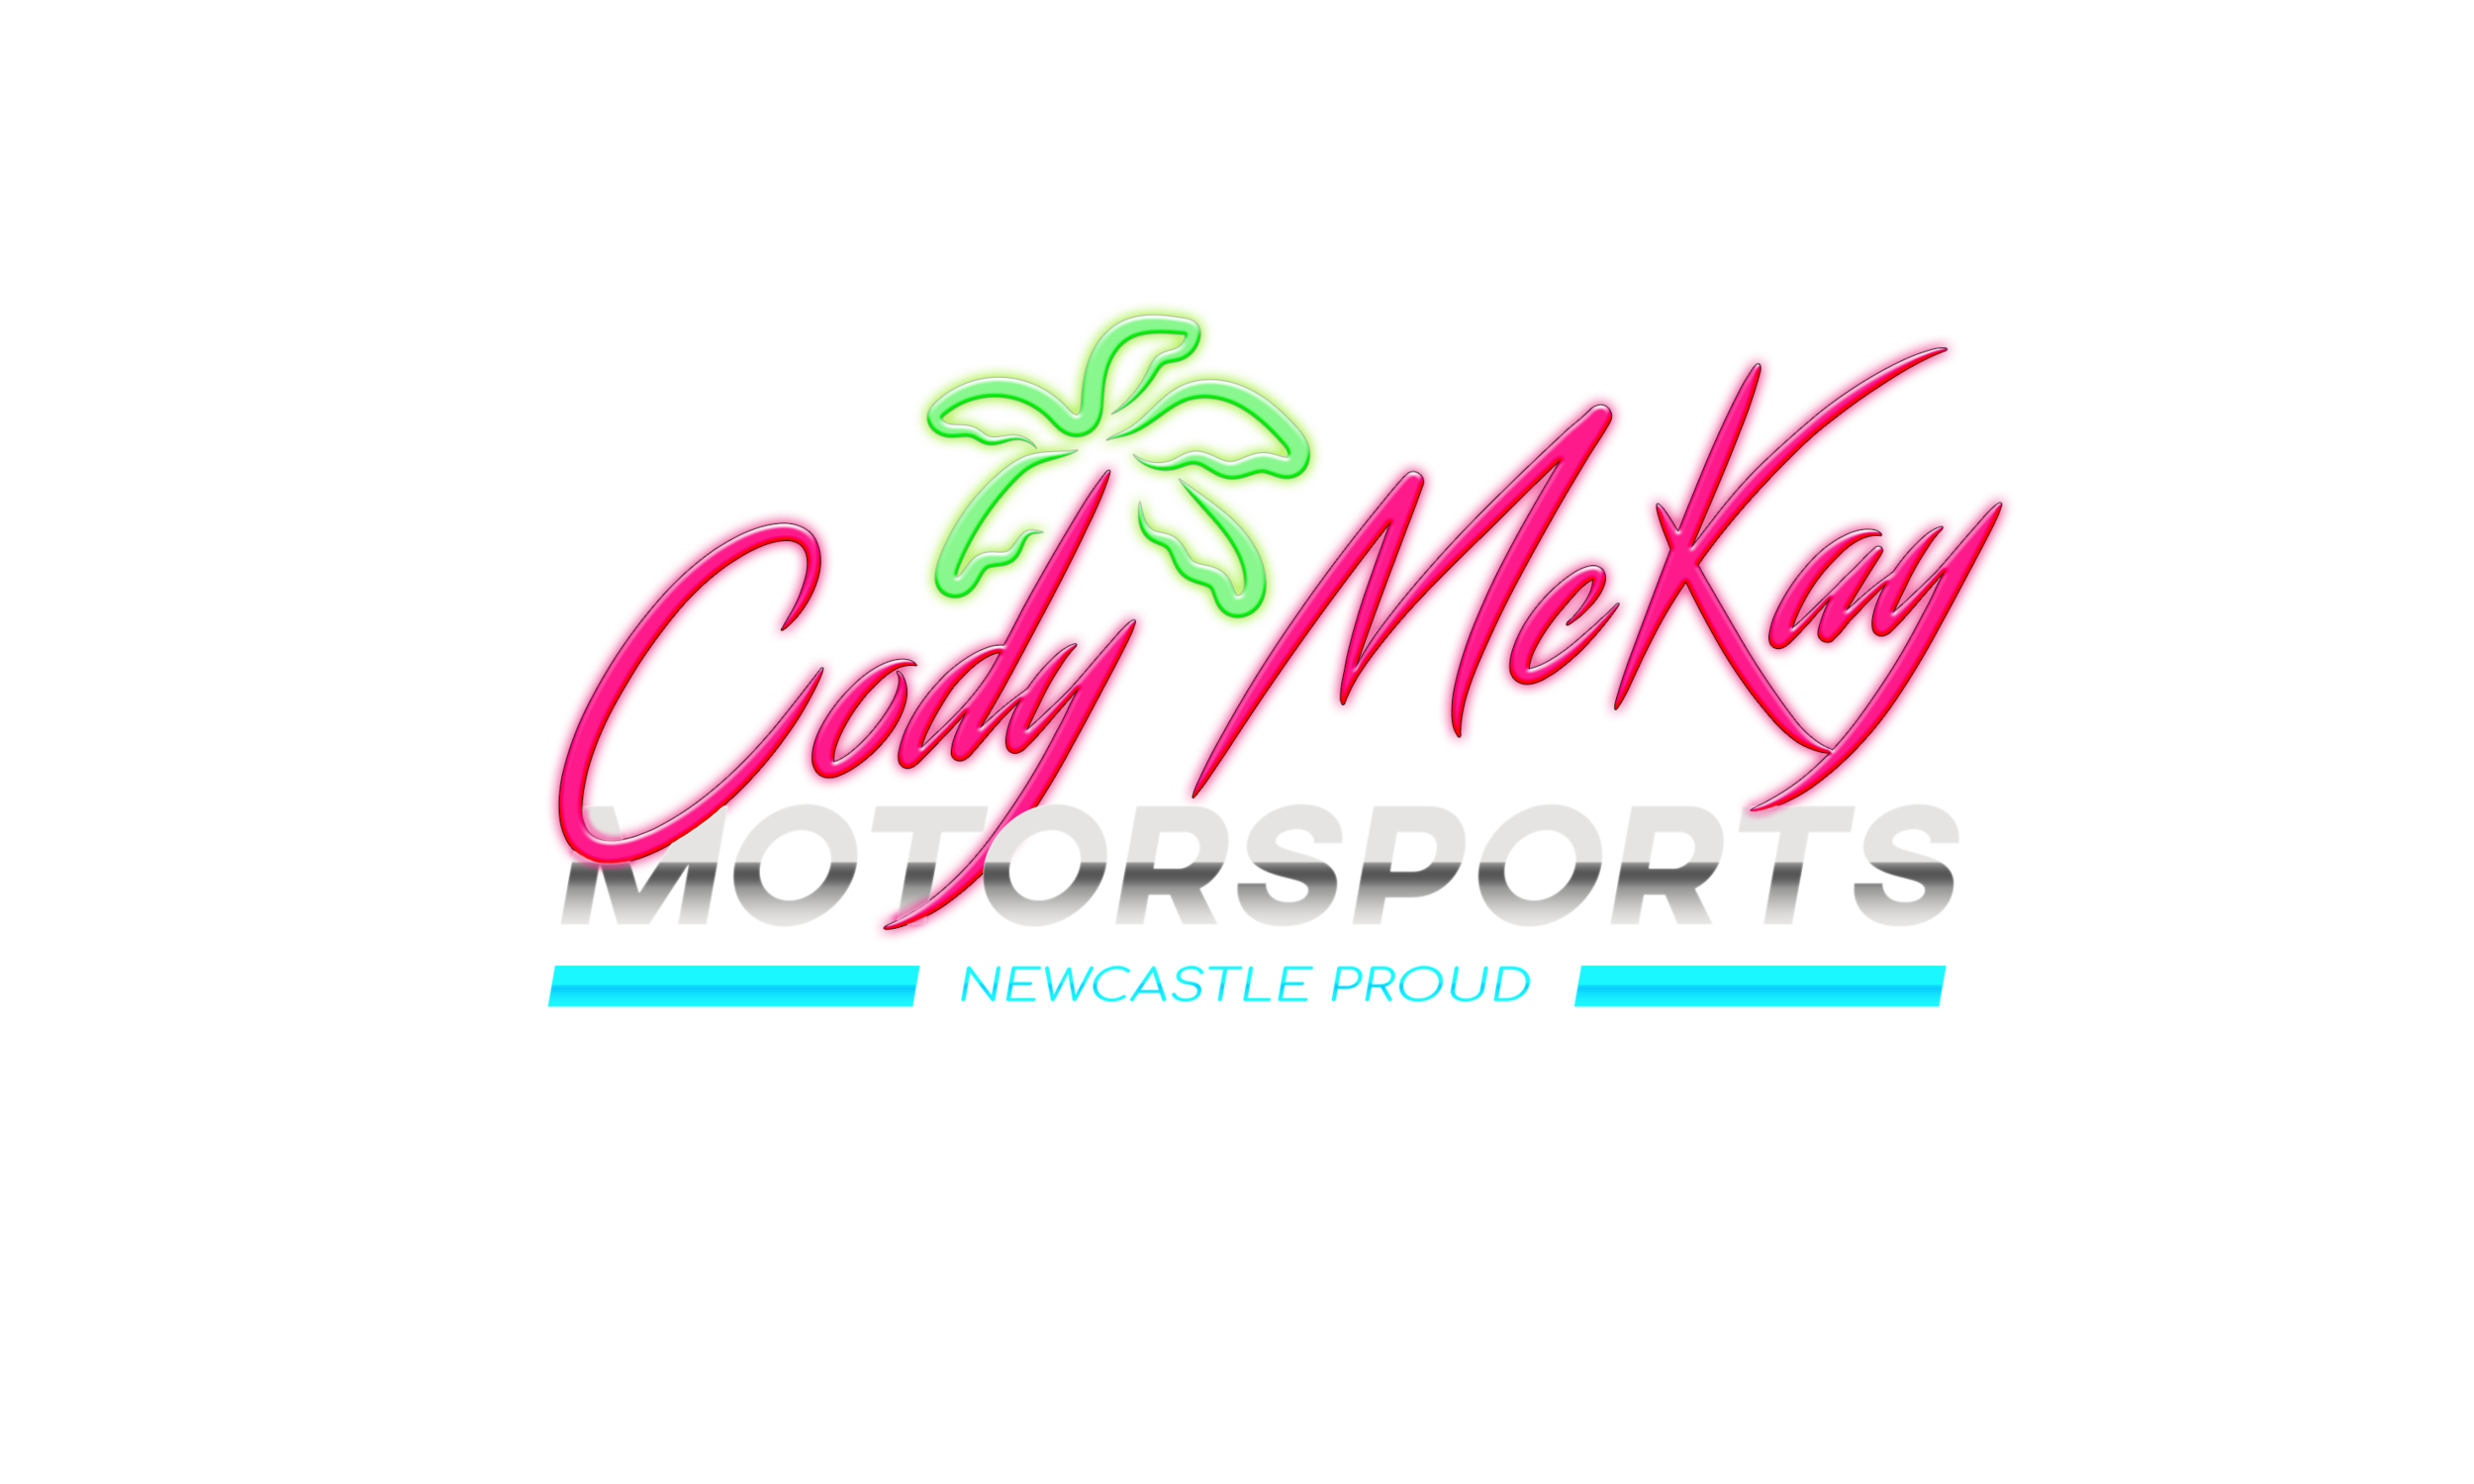 Cody McKay Motorsports